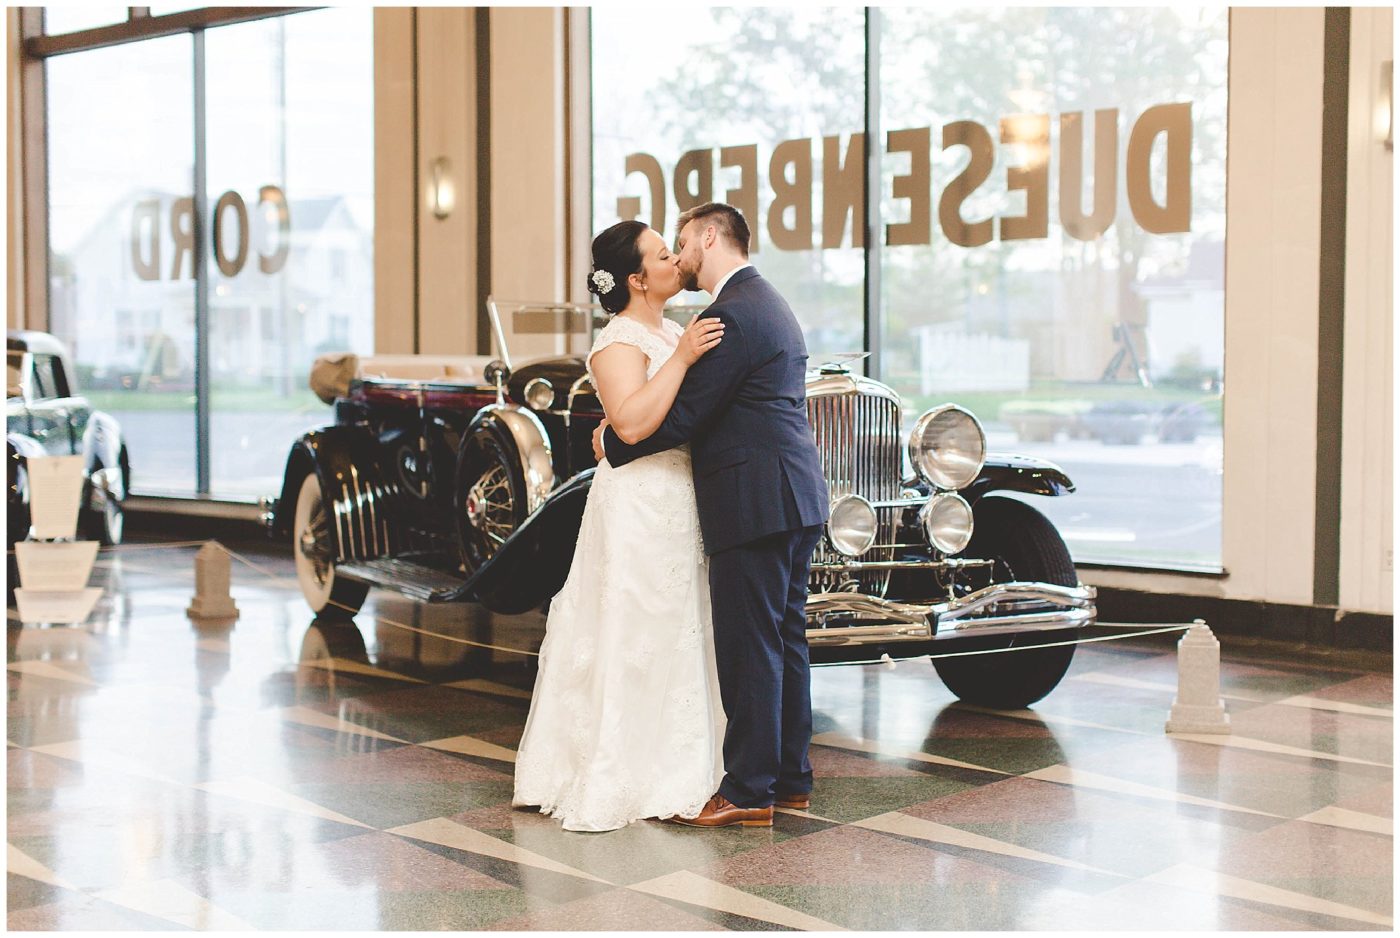 Auburn Cord Duesenberg Automobile Museum wedding venue, Auburn Indiana Wedding Photographer_0002